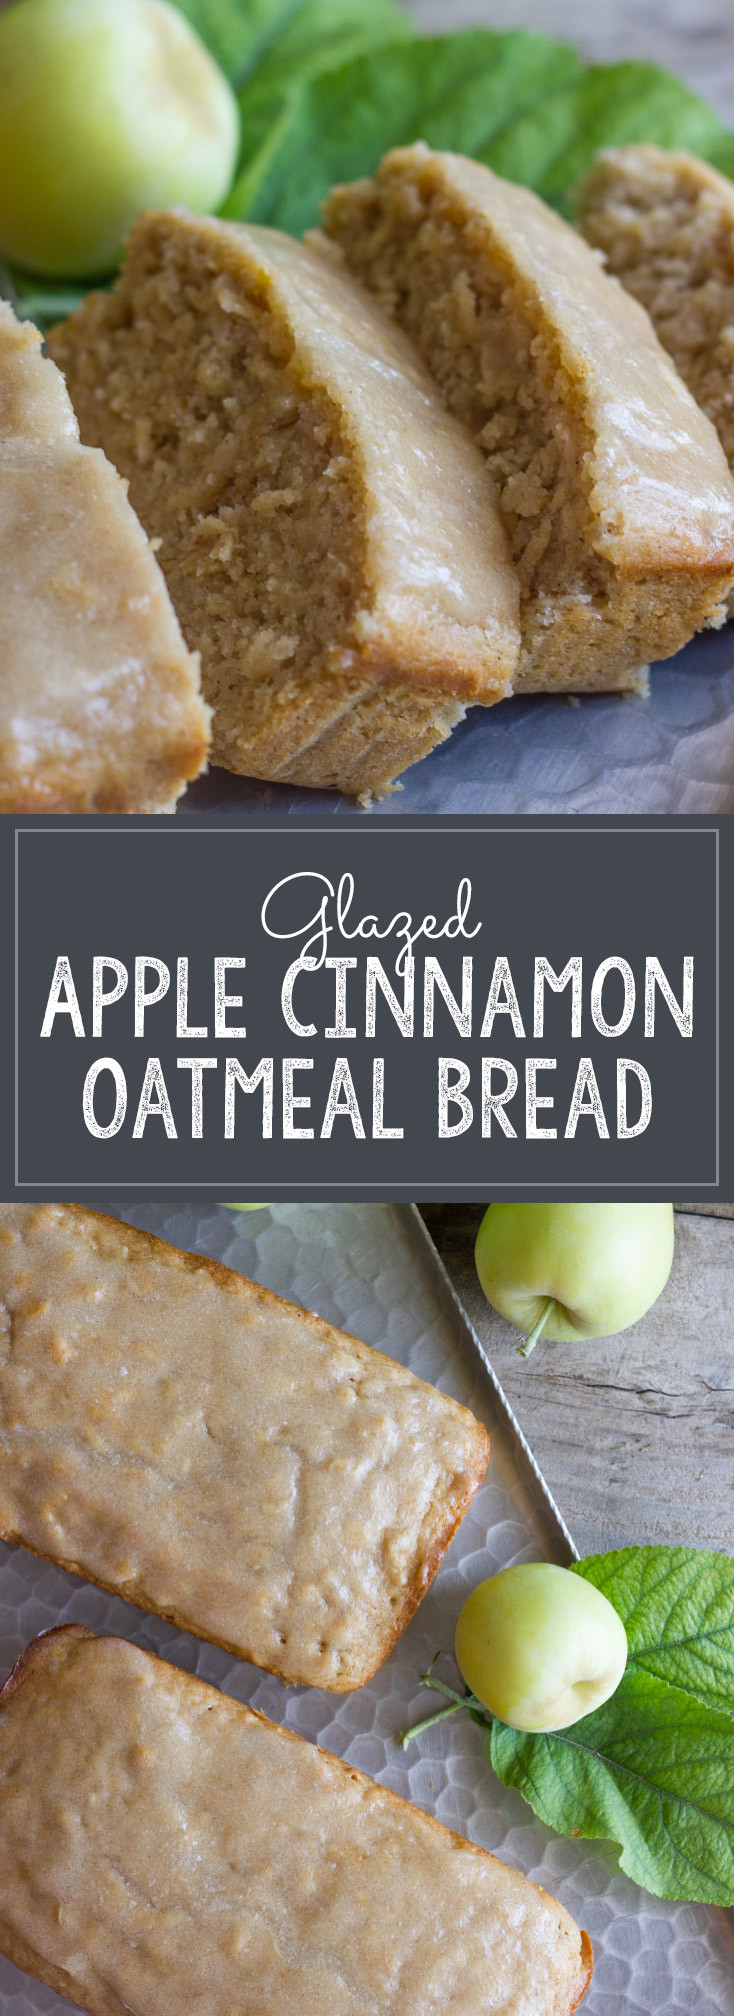 Healthy Apple Cinnamon Bread
 healthy apple bread with oats